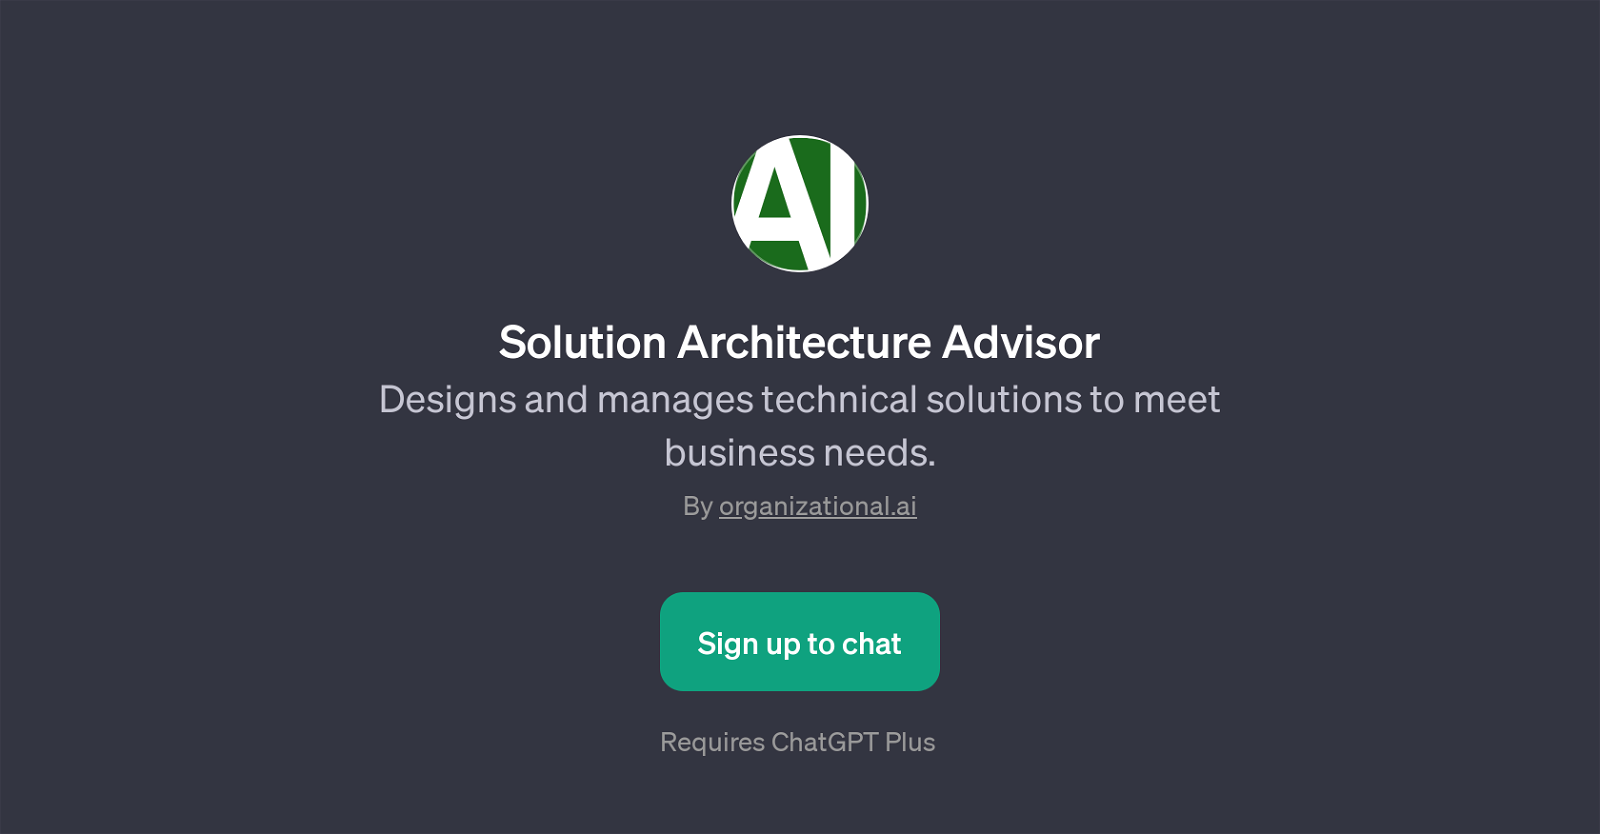 Solution Architecture Advisor website